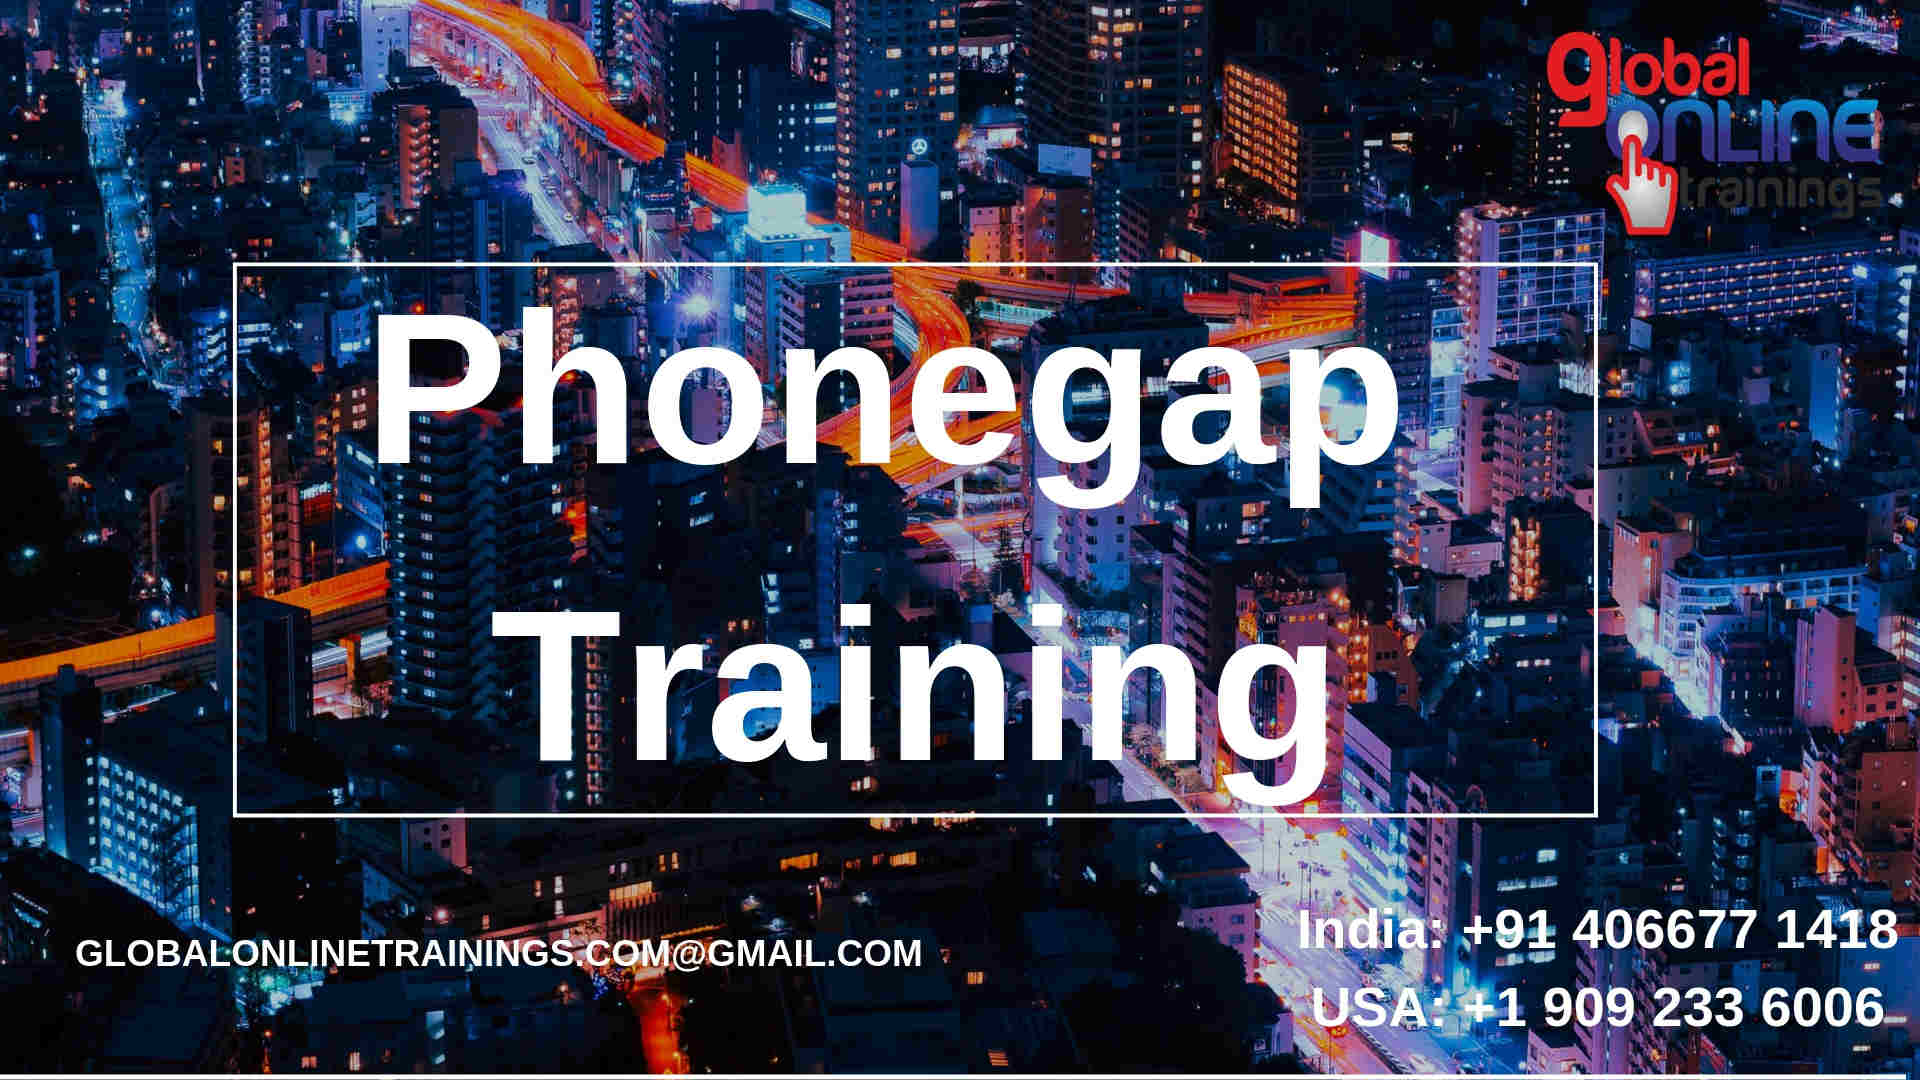 Phonegap training | Phonegap online training - Global online trainings, Hyderabad, Andhra Pradesh, India